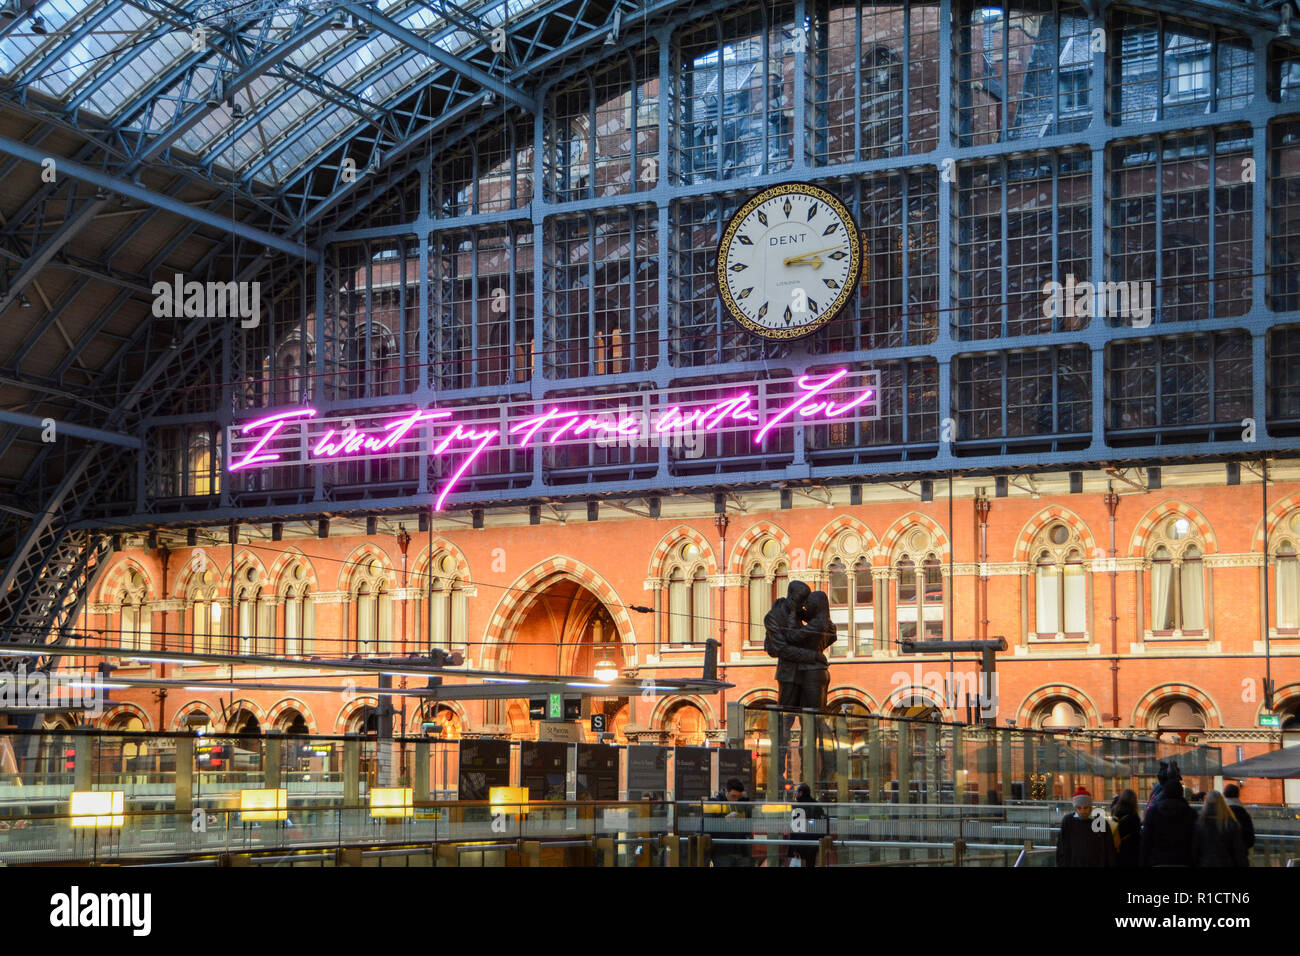 Tracey Emins pinkfarbene Neoninstallation „I Want My Time With You“ neben dem weltberühmten Dent-Zifferblatt am Bahnhof St. Pancras, London, England Stockfoto